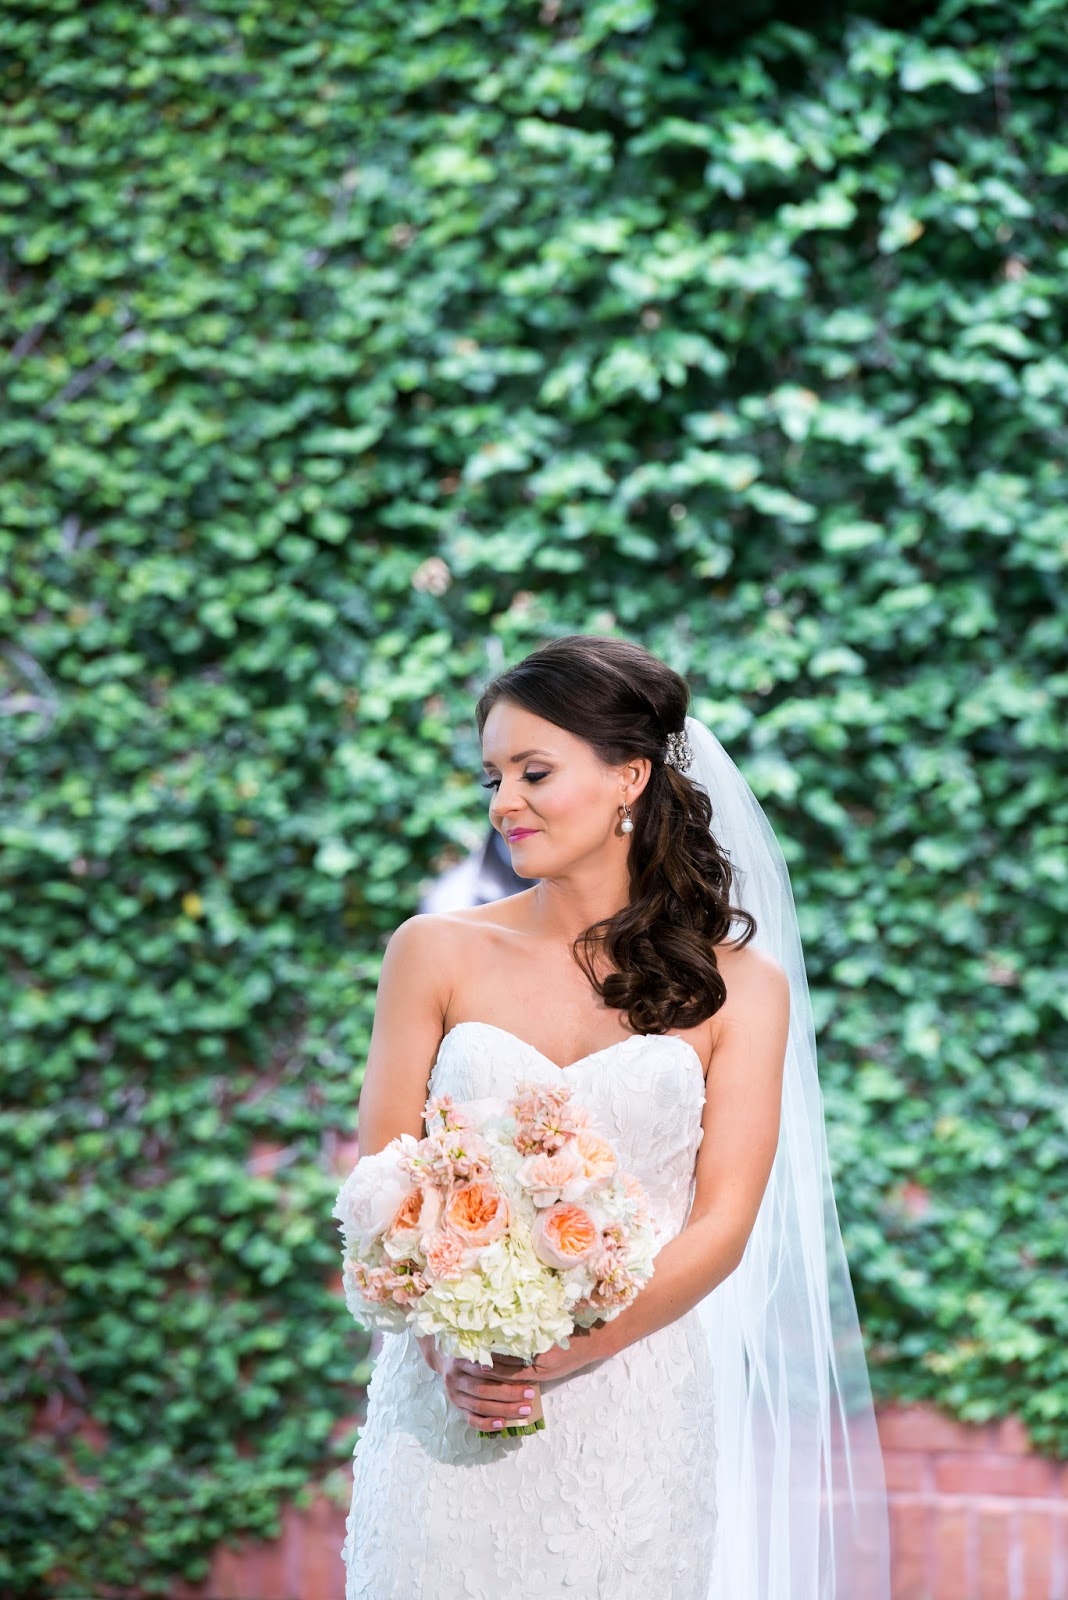 SHEIN WEDDING DRESS TRY ON HAUL 2023, BACHELORETTE, WEDDING, RECEPTION, HONEYMOON